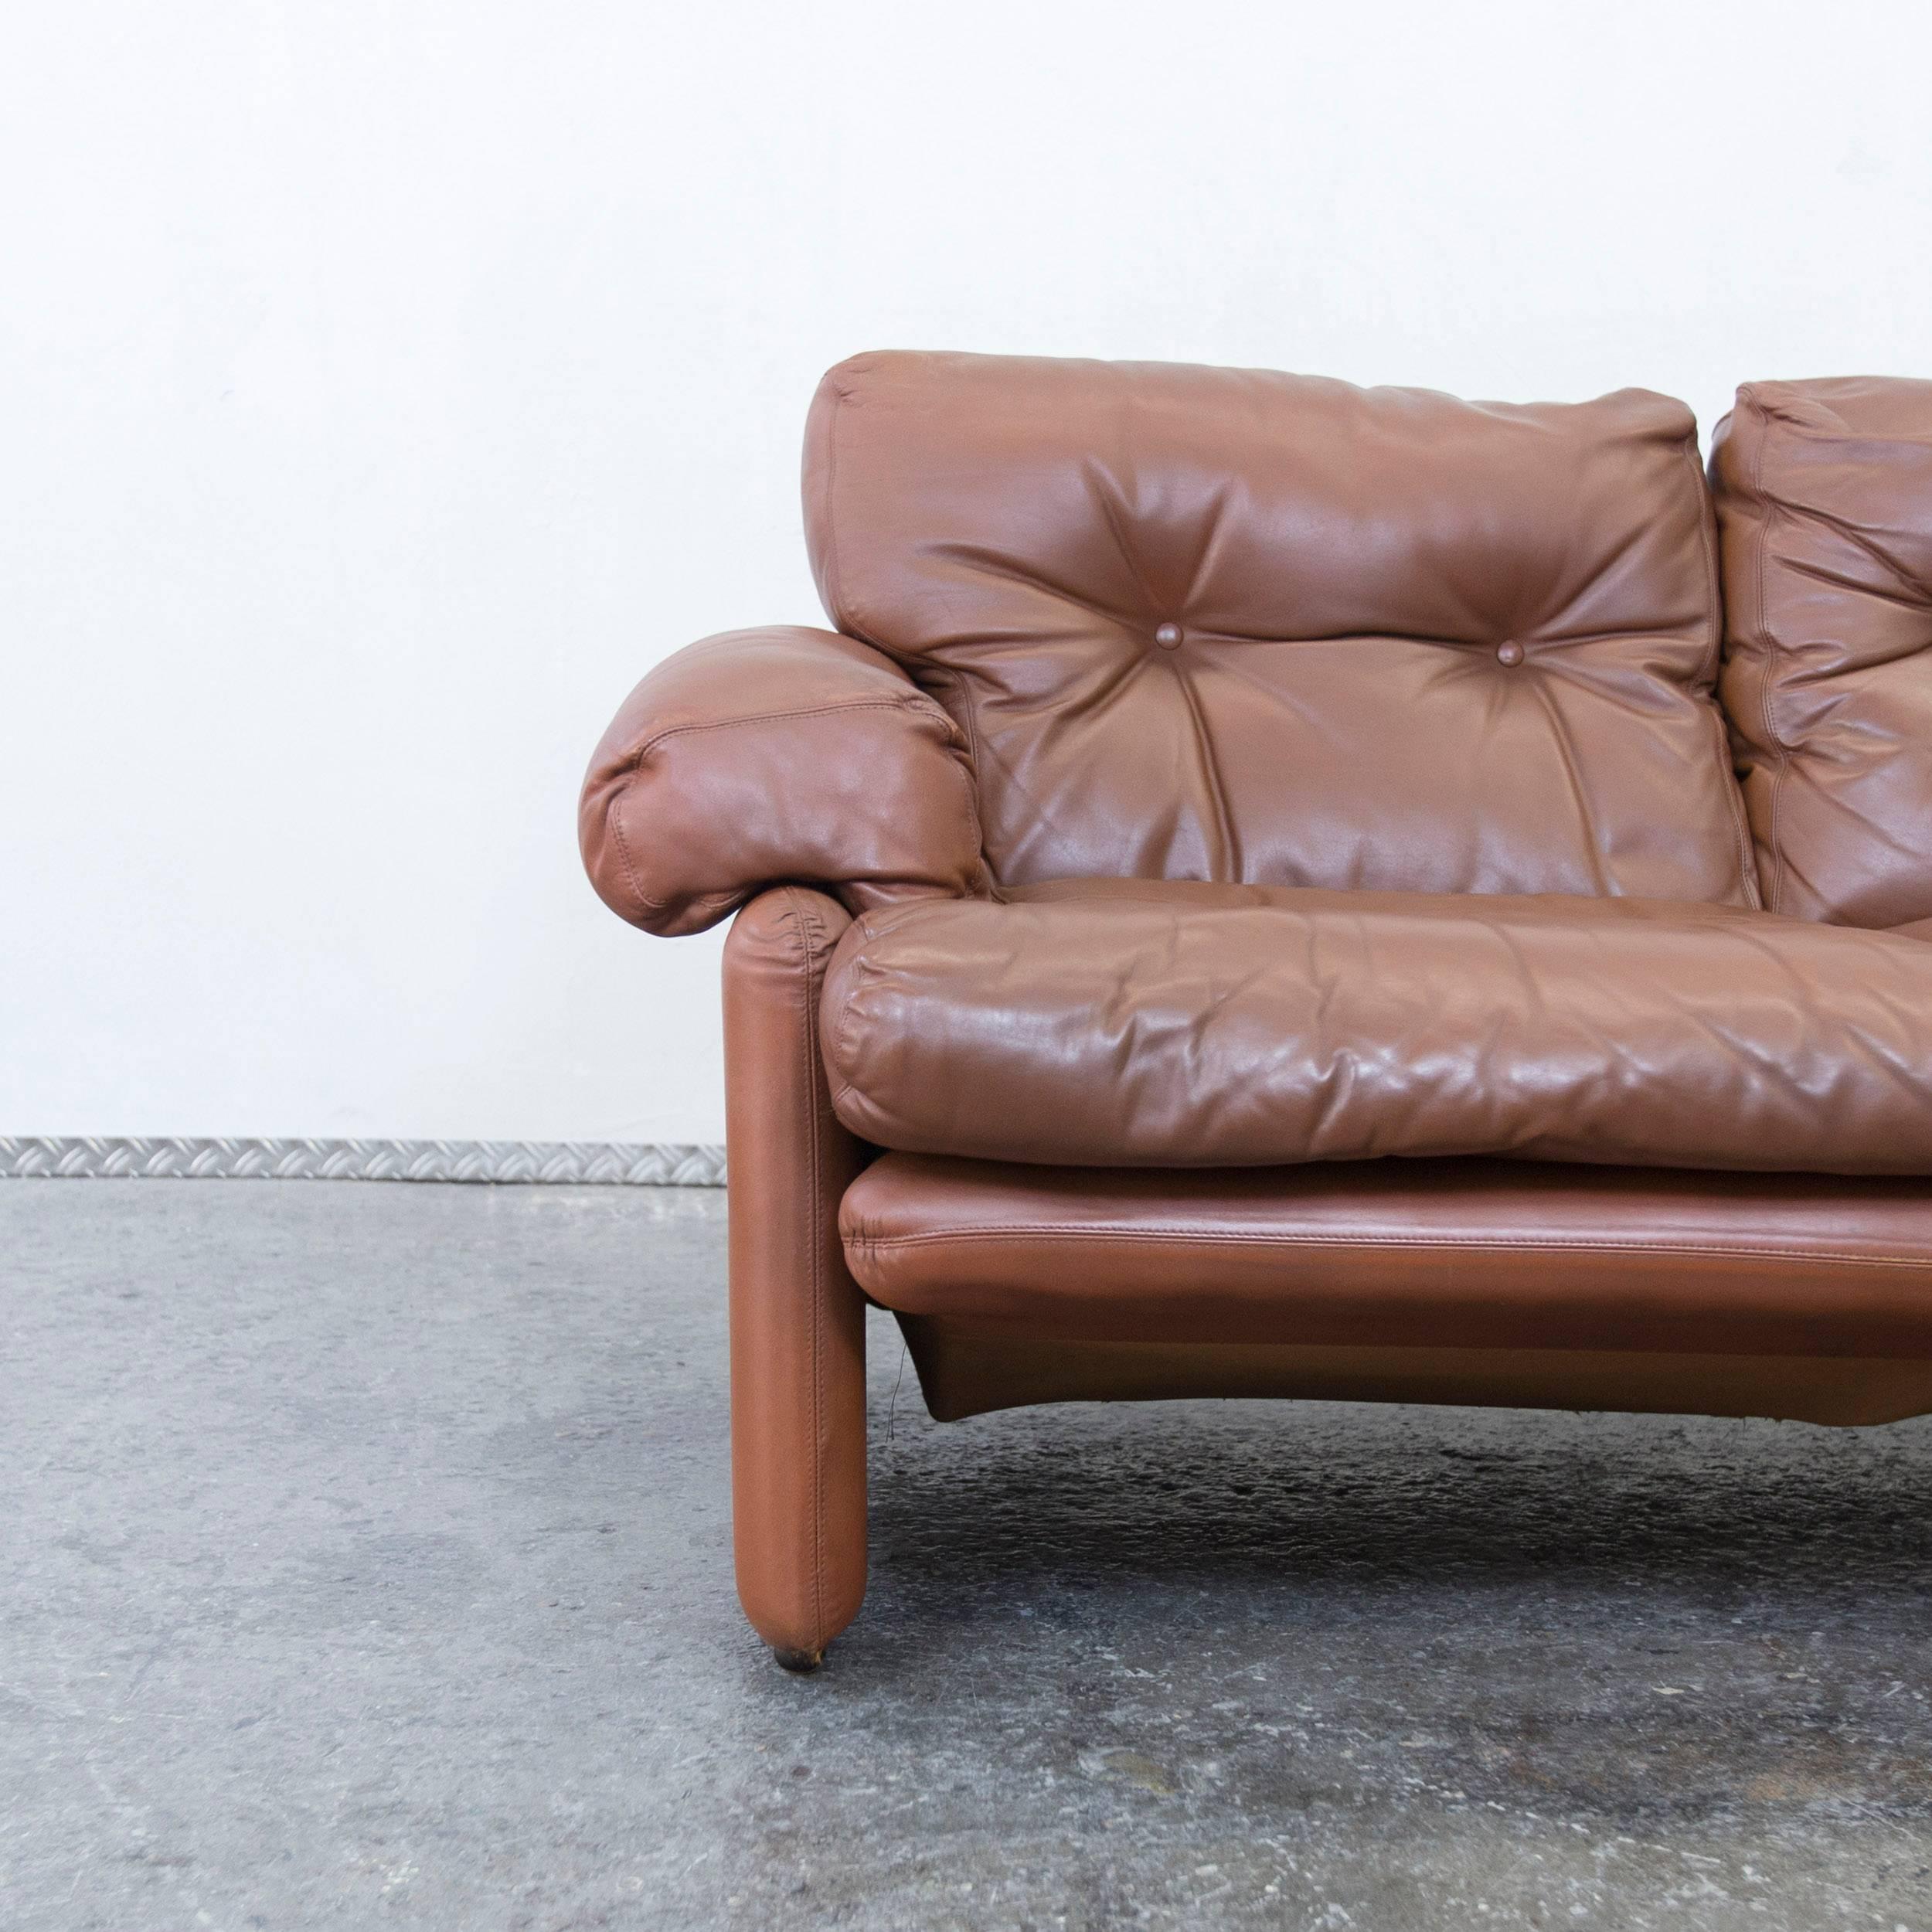 C&B Italia Coronado fine leather two-seat sofa by Tobia Scarpa couch brown manufactured before the rename to B&B Italia around 1966-1972.